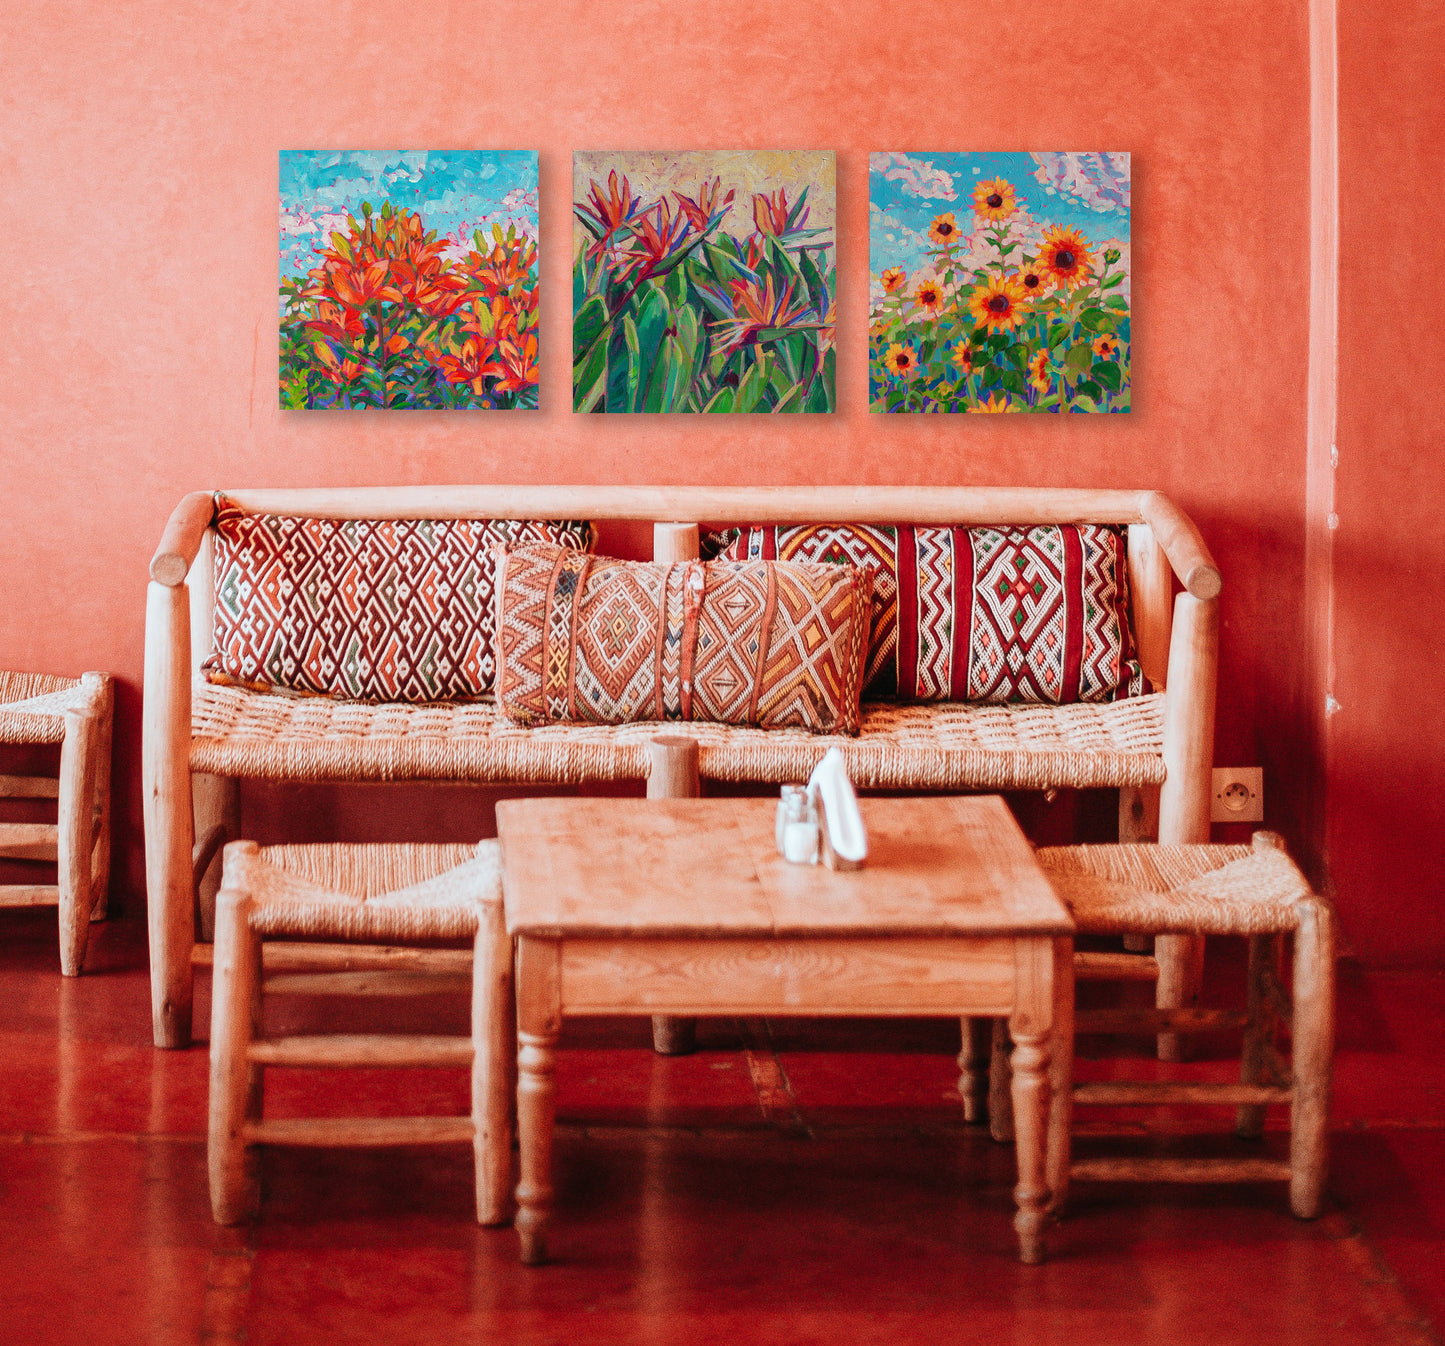 three floral paintings of orange flowers in an orange Southwest themed room